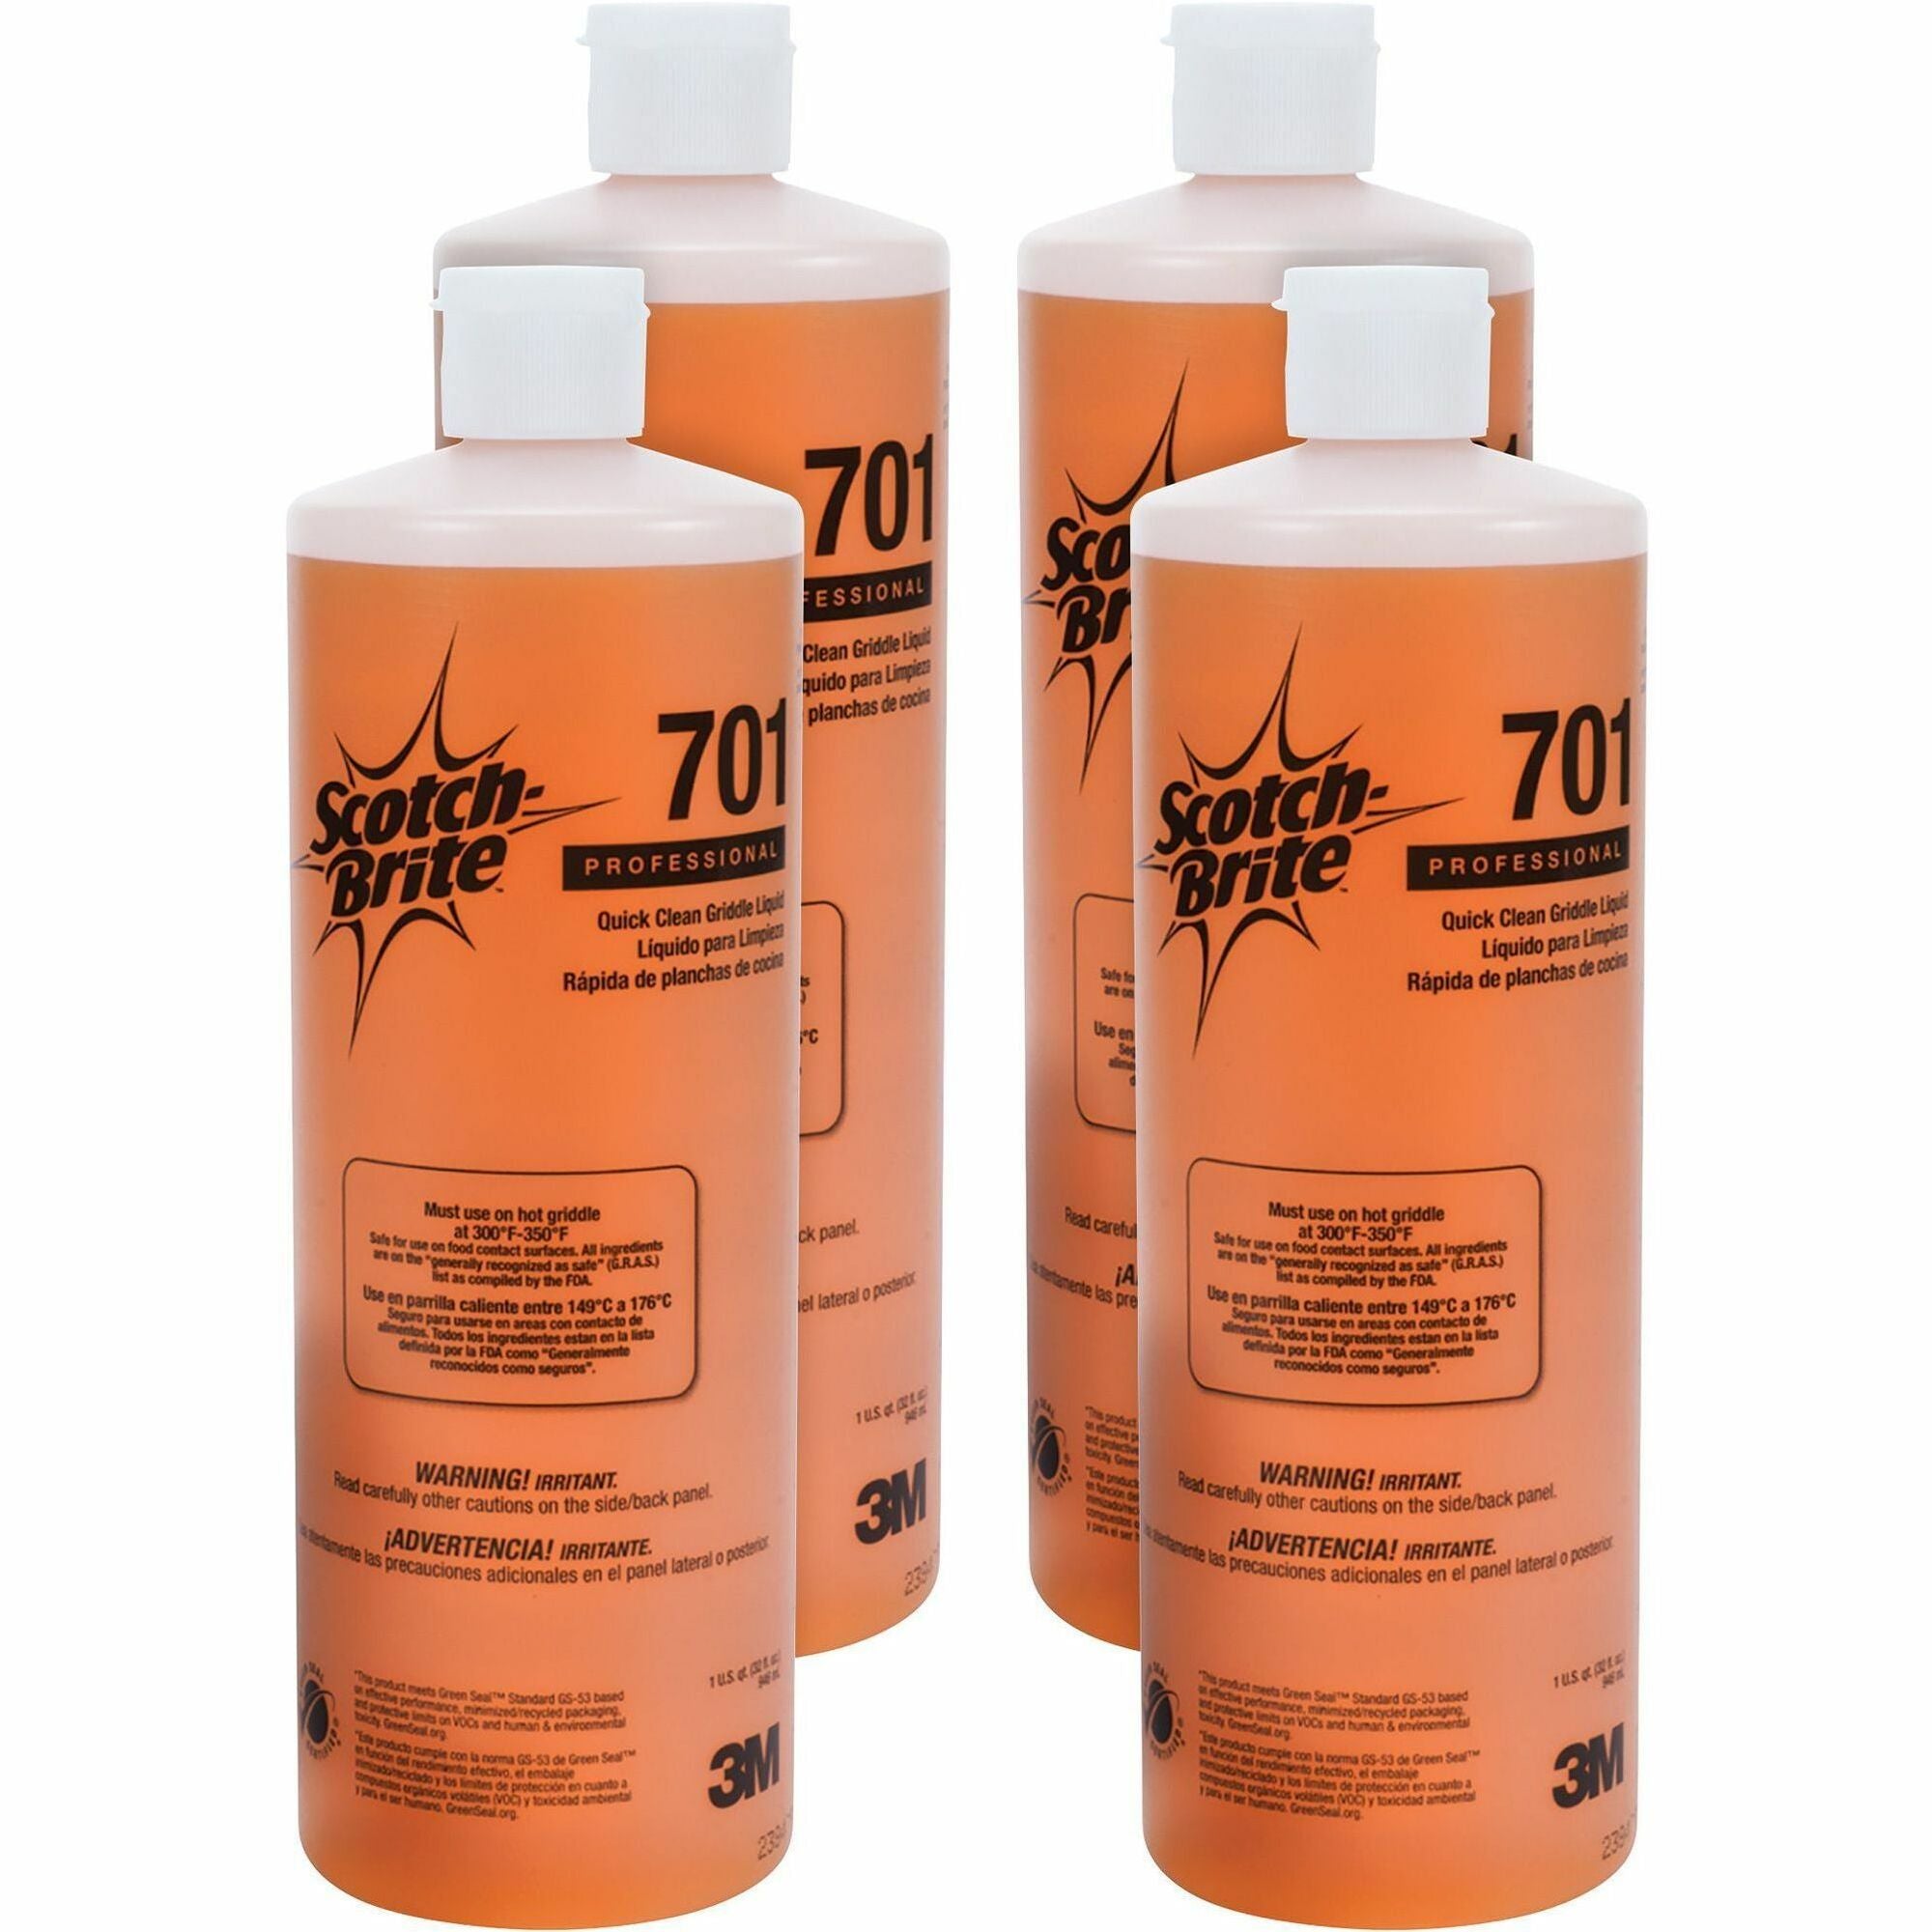 Scotch-Brite Quick Clean Griddle Liquid 701 - 32 fl oz (1 quart)Bottle - 4 / Carton - Caustic-free, Odor-free - Orange - 1